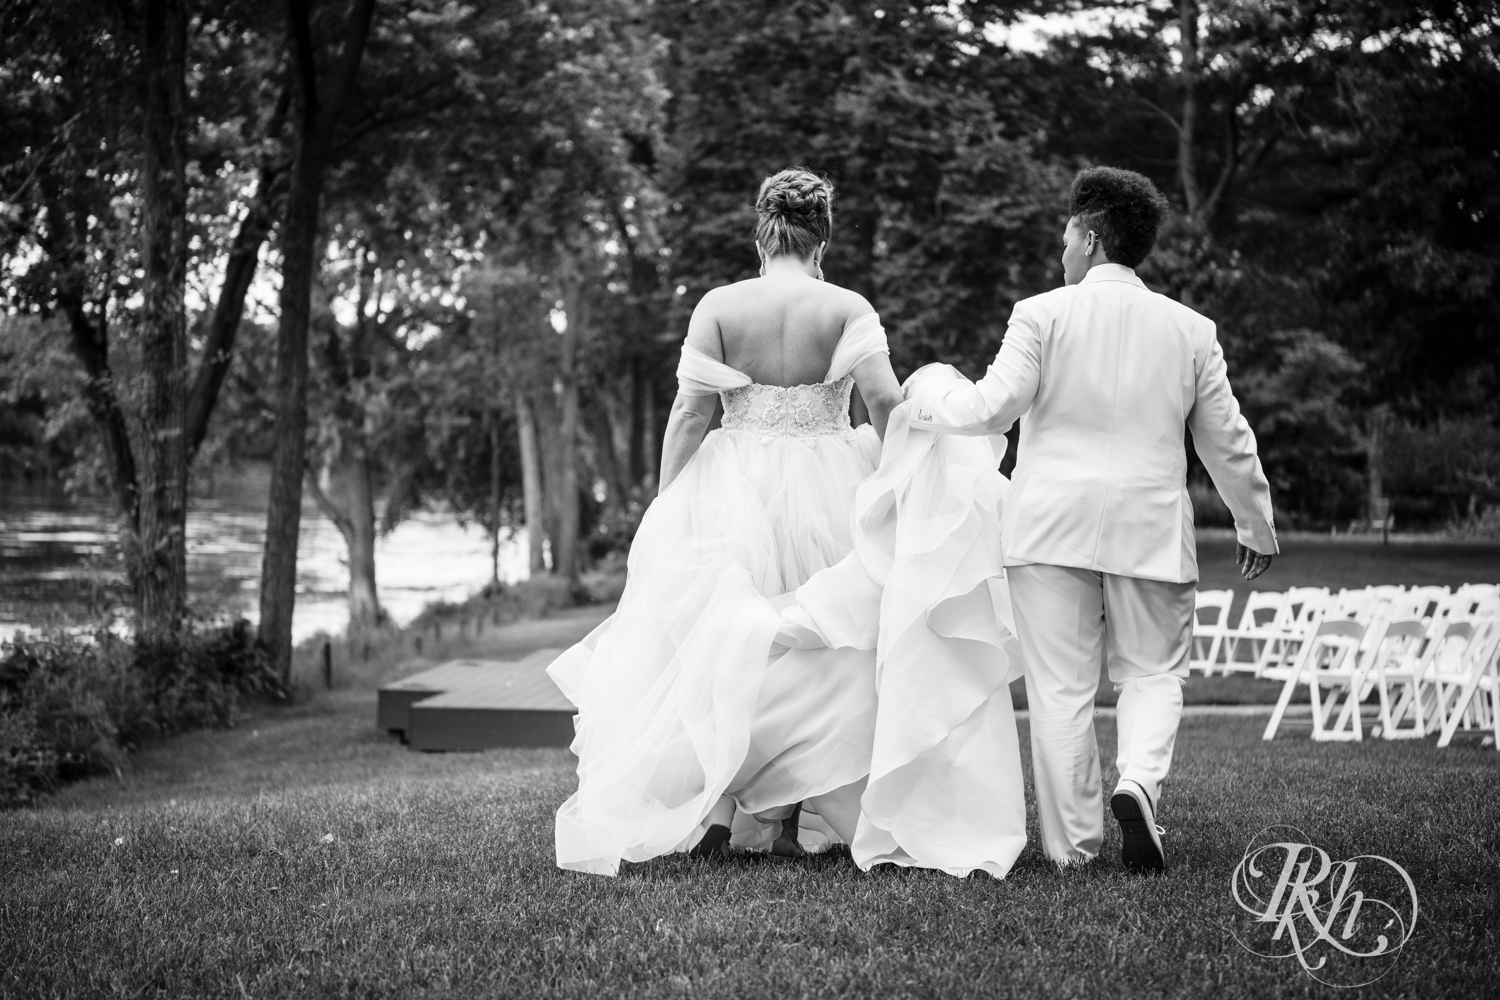 Black lesbian bride and white bride walk together at Leopold's Mississippi Gardens in Brooklyn Park, Minnesota.